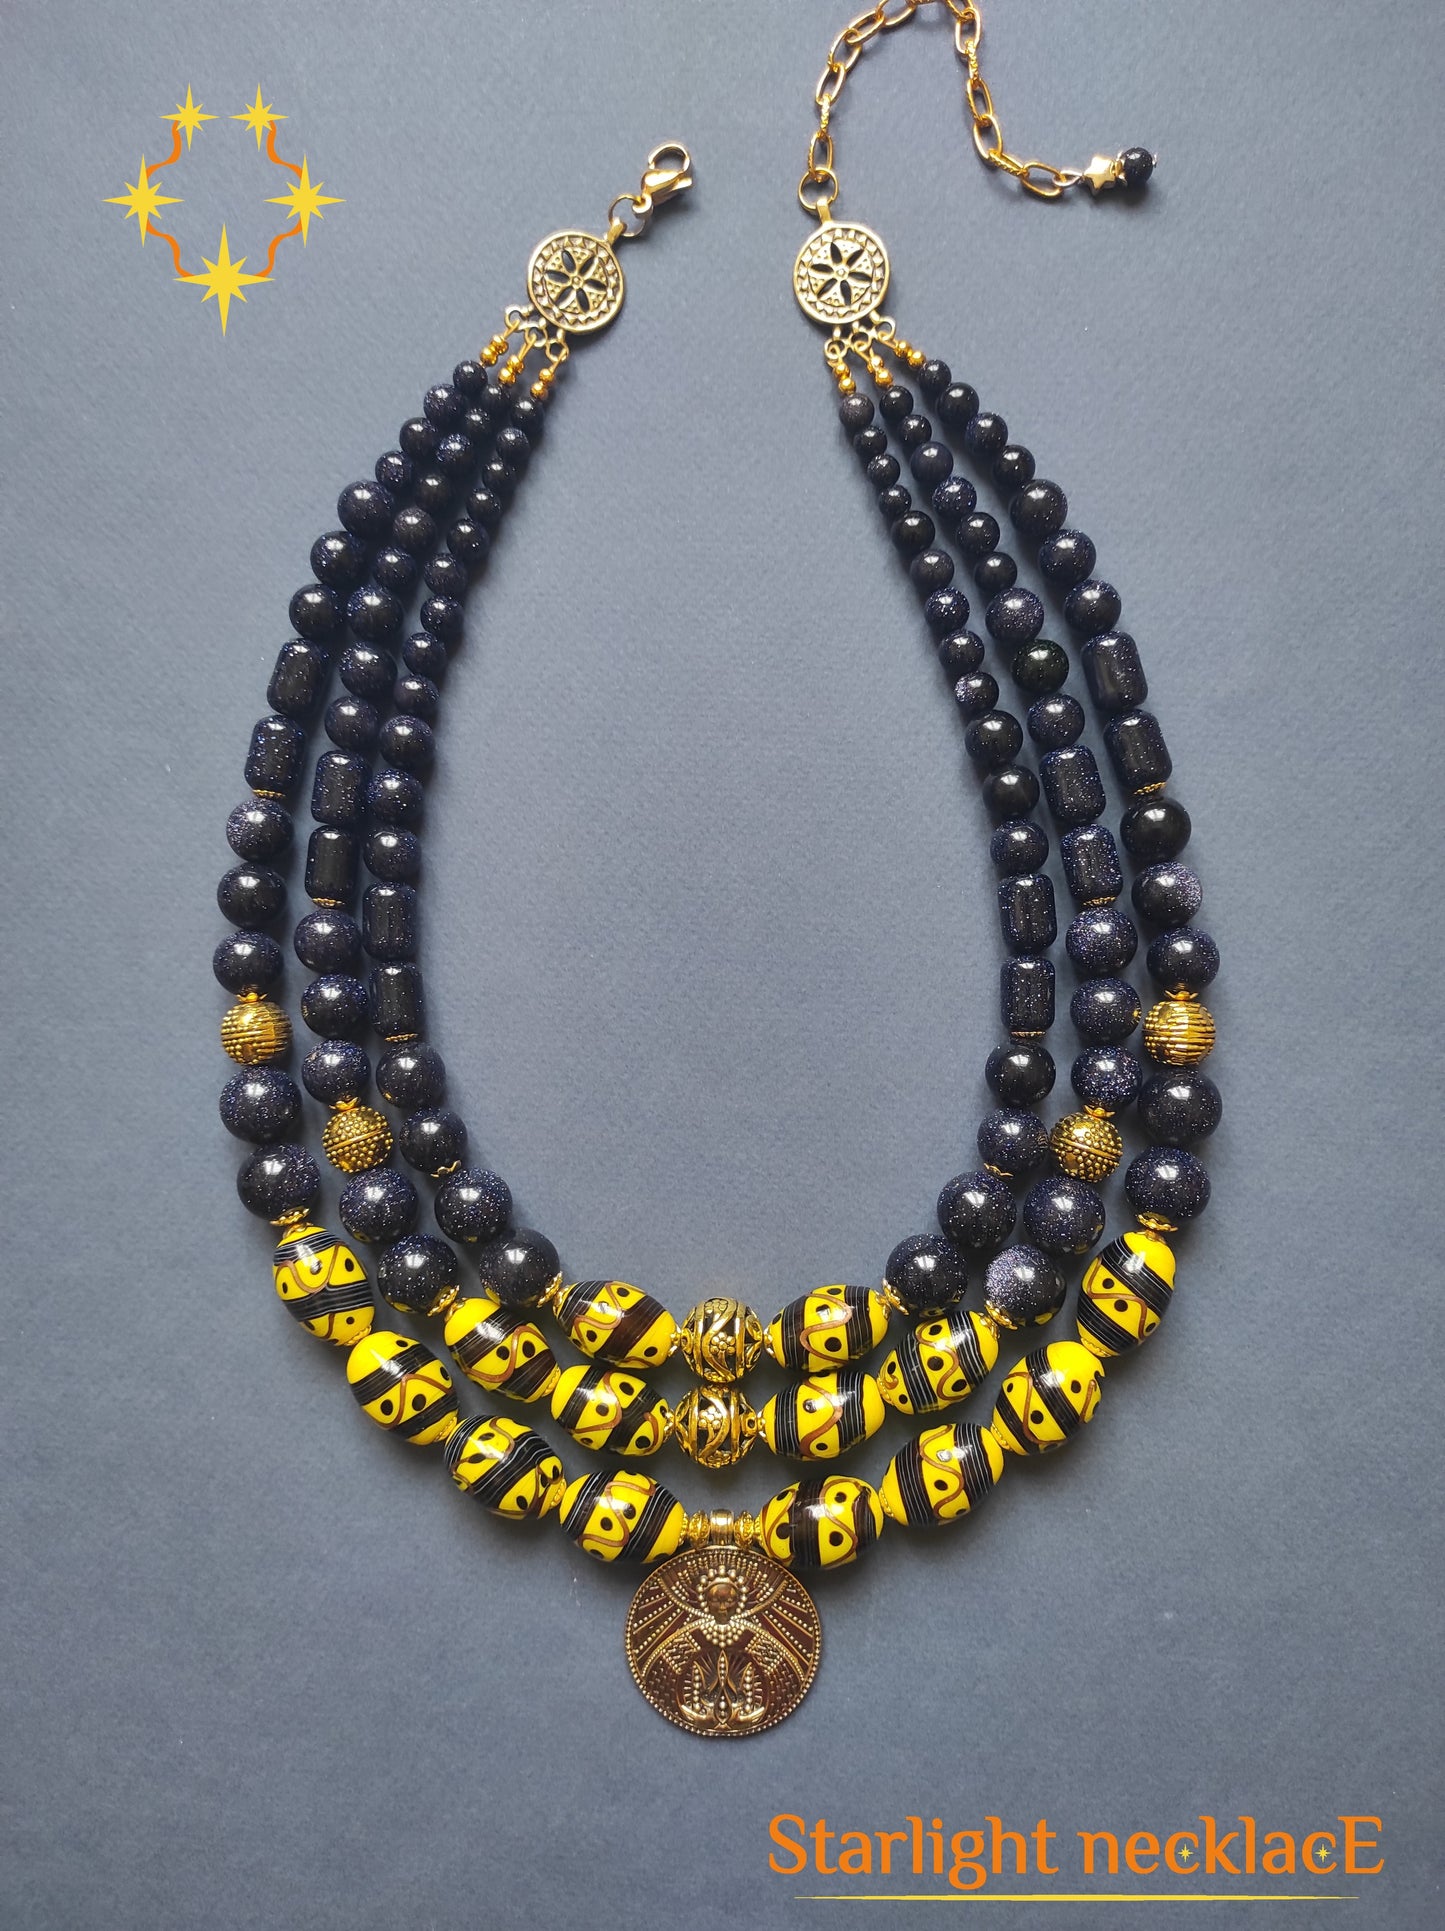 Necklace zgarda "Ukrainian starfall (2)" from glass beads and adventurous